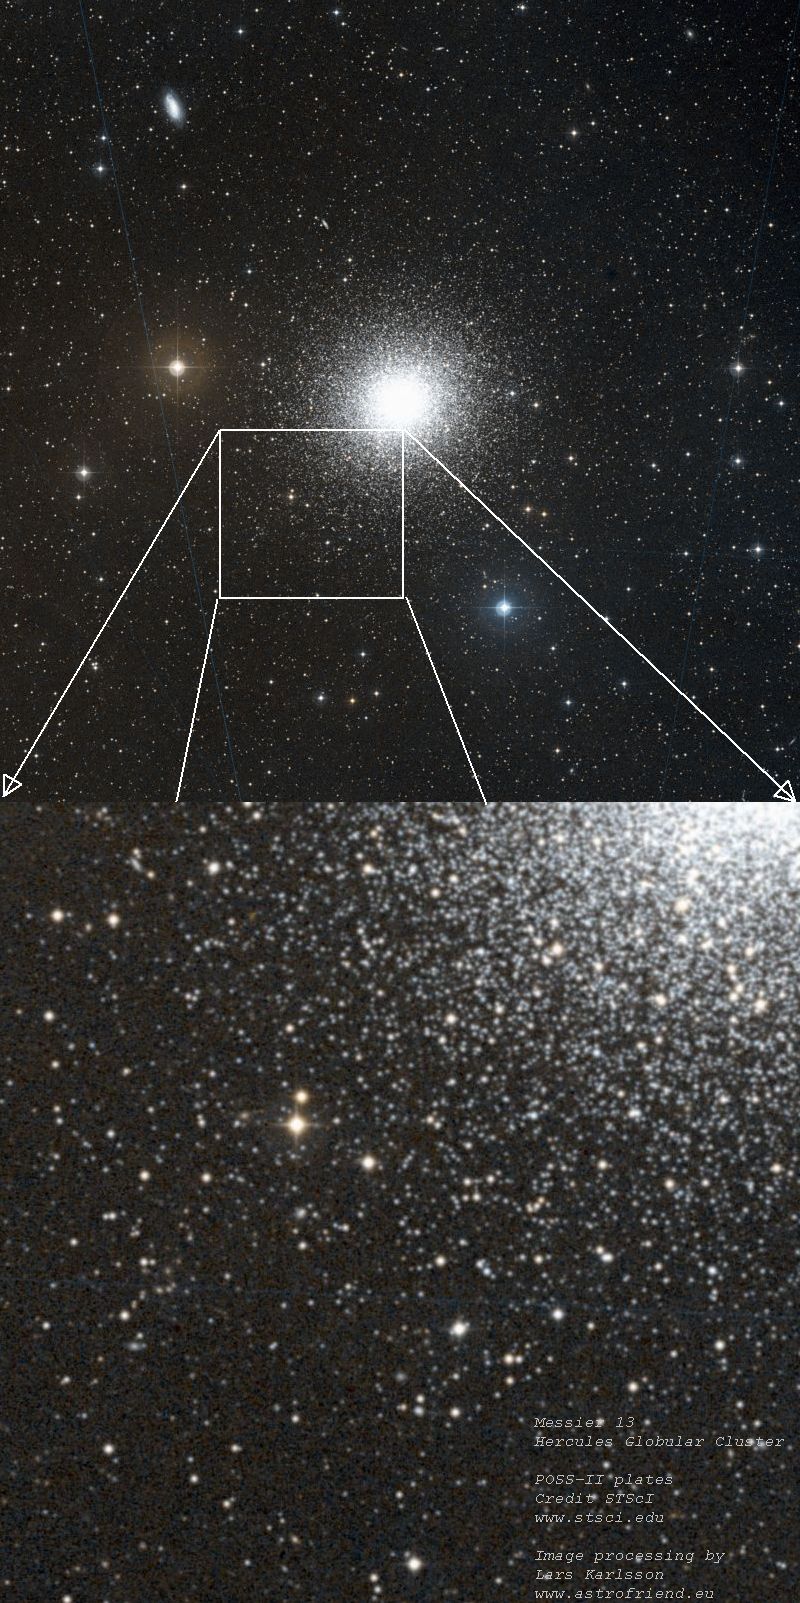 POSS-II: M13 Hercules Globular Cluster